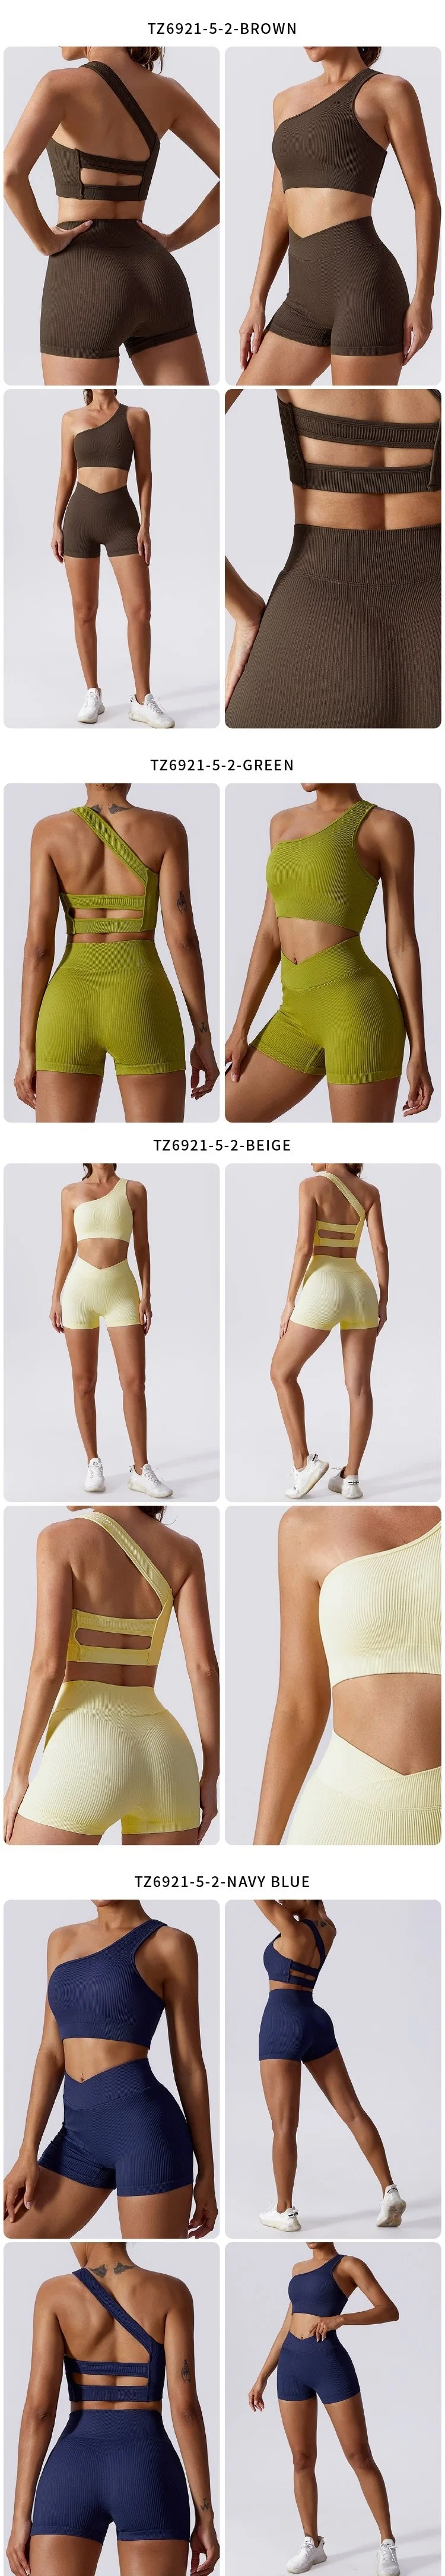 Wholesale OEM/ODM Women 2 Pieces Leggings + Bra Apparel Clothing Rib Yoga Set Gym Workout Fitness Active Sports Sets